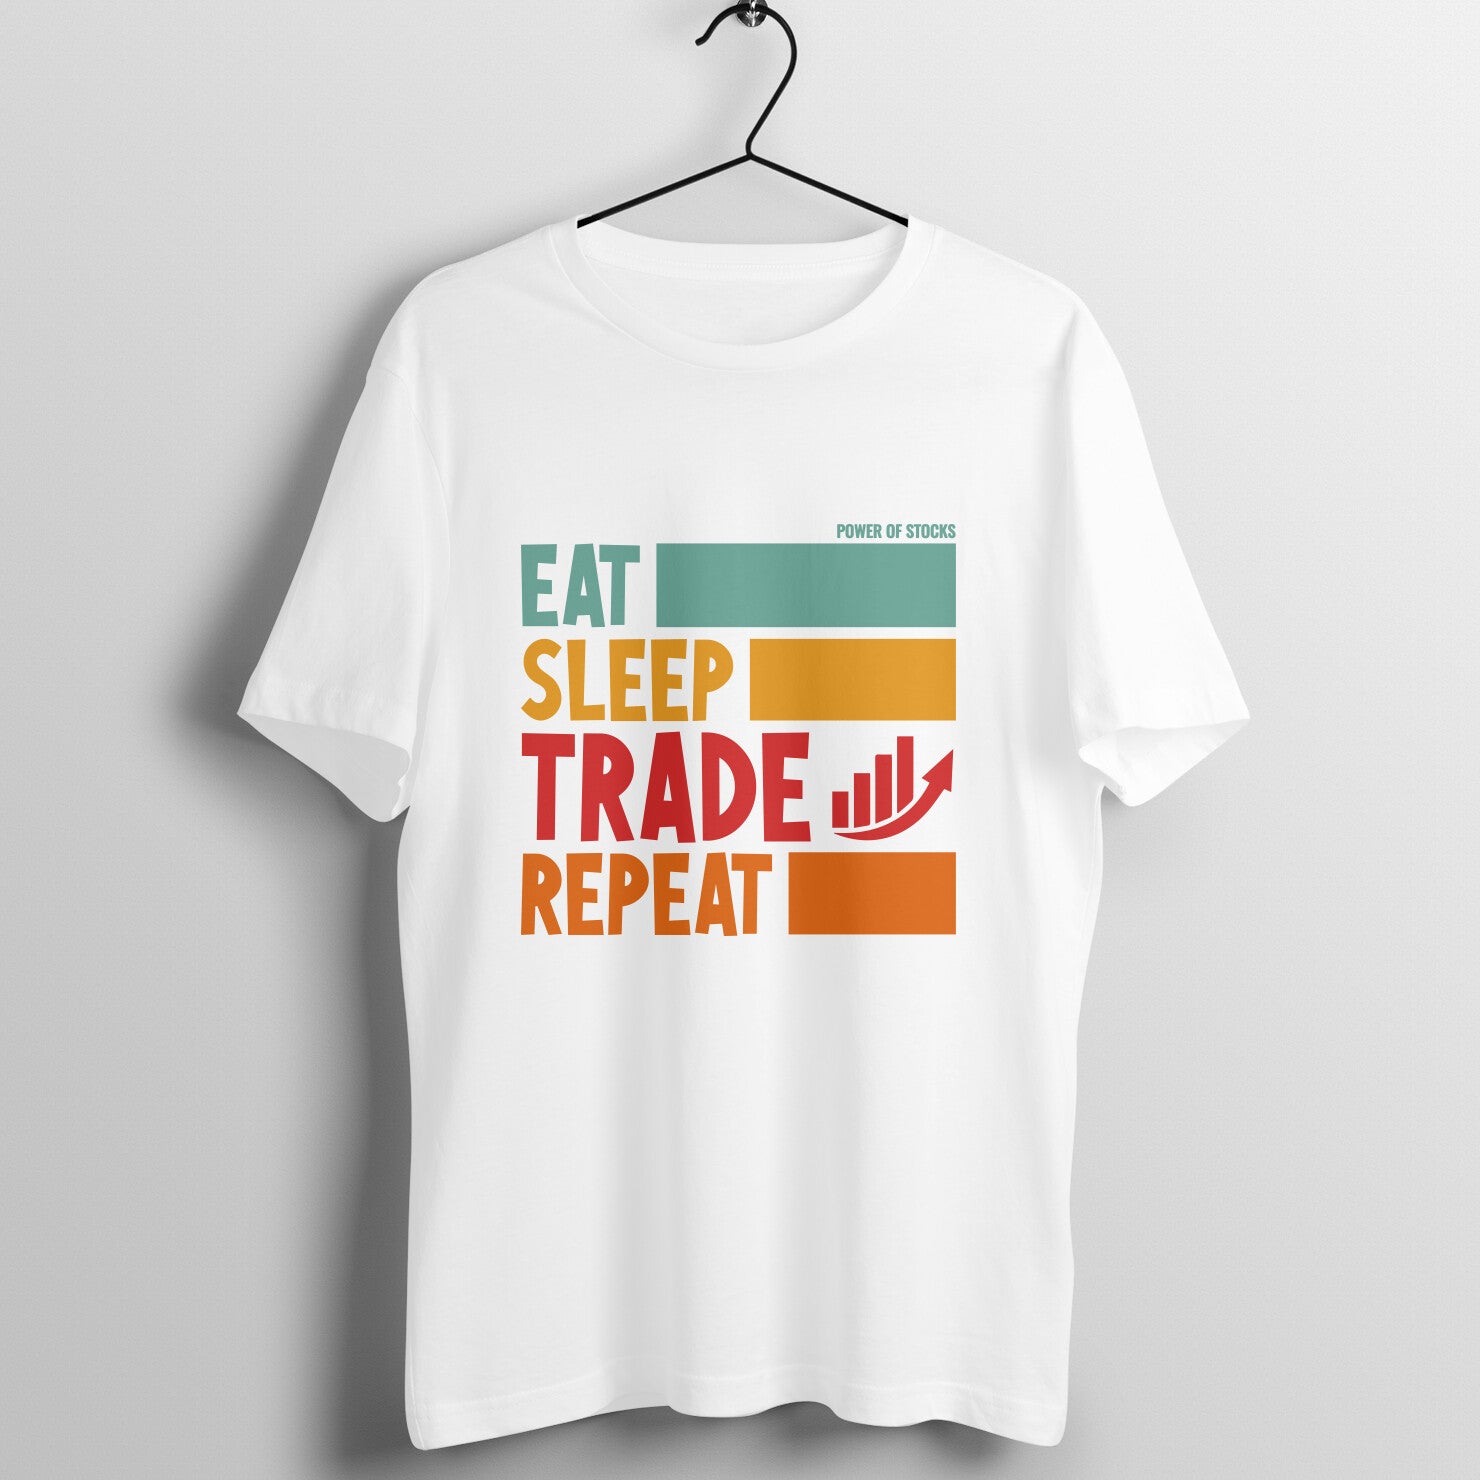 Eat Sleep Trade Repeat Men's T-Shirt